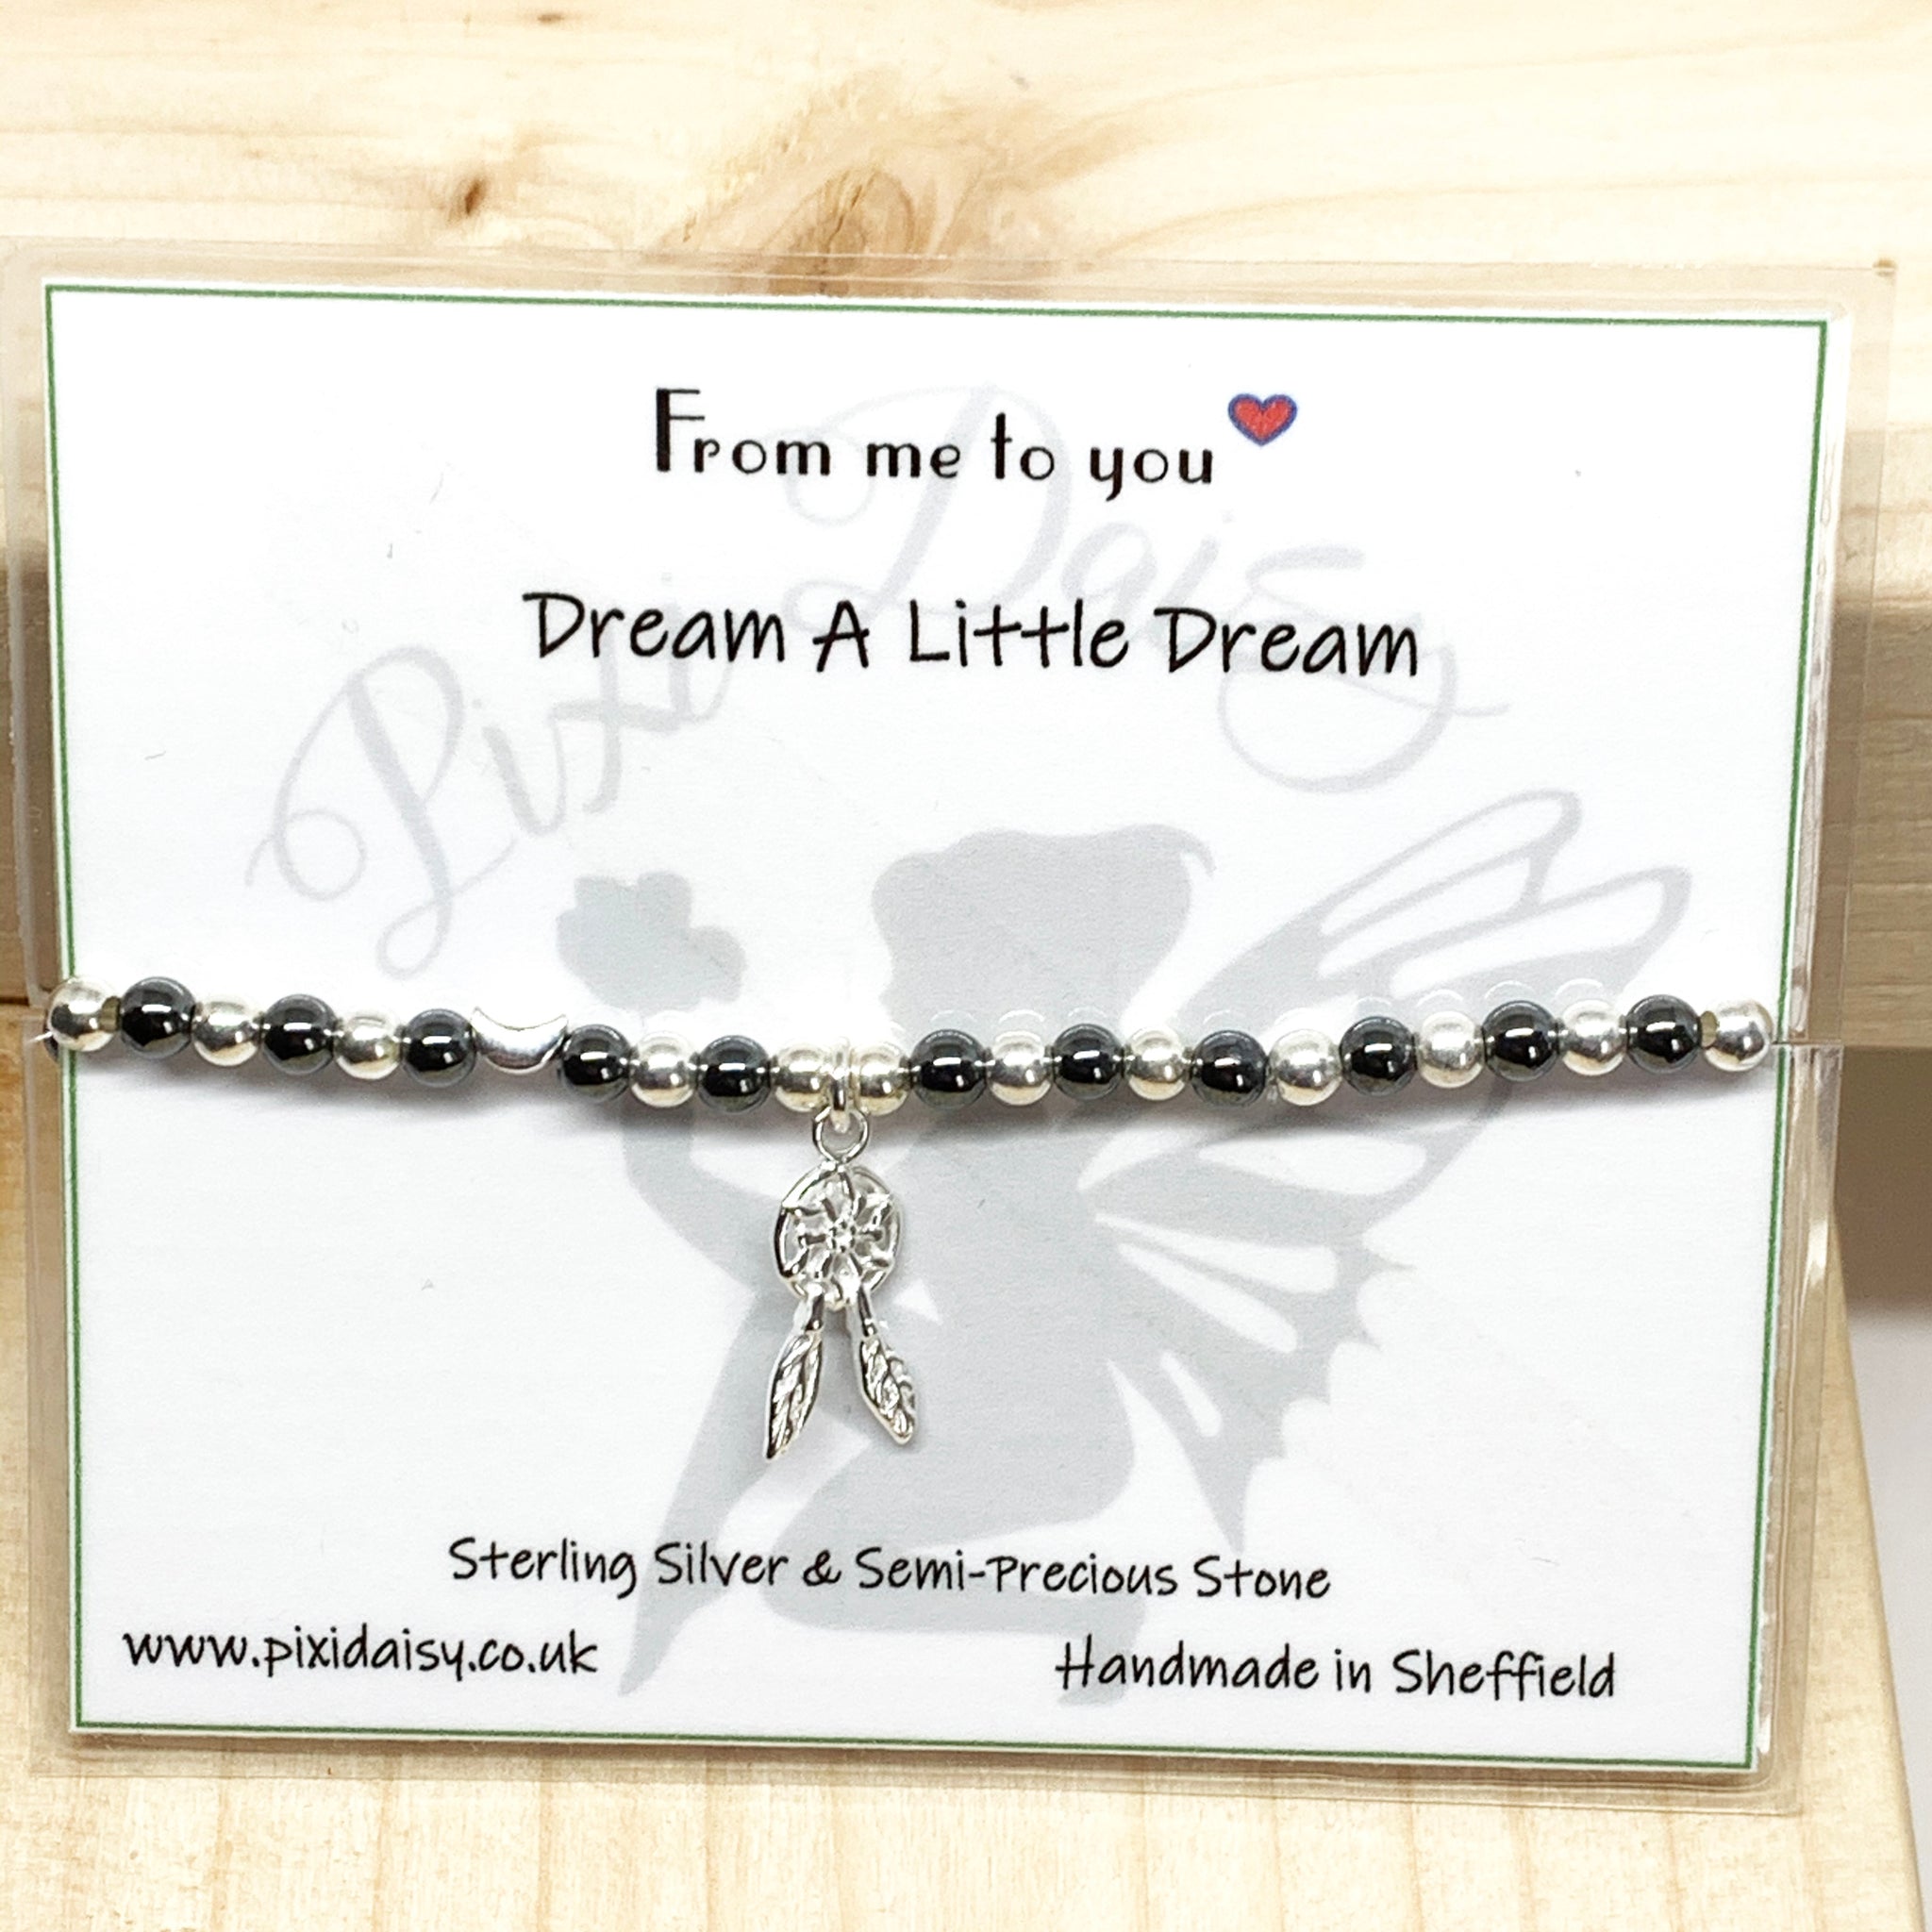 Dream a Little Dream Sentiment Bracelet from Pixi Daisy